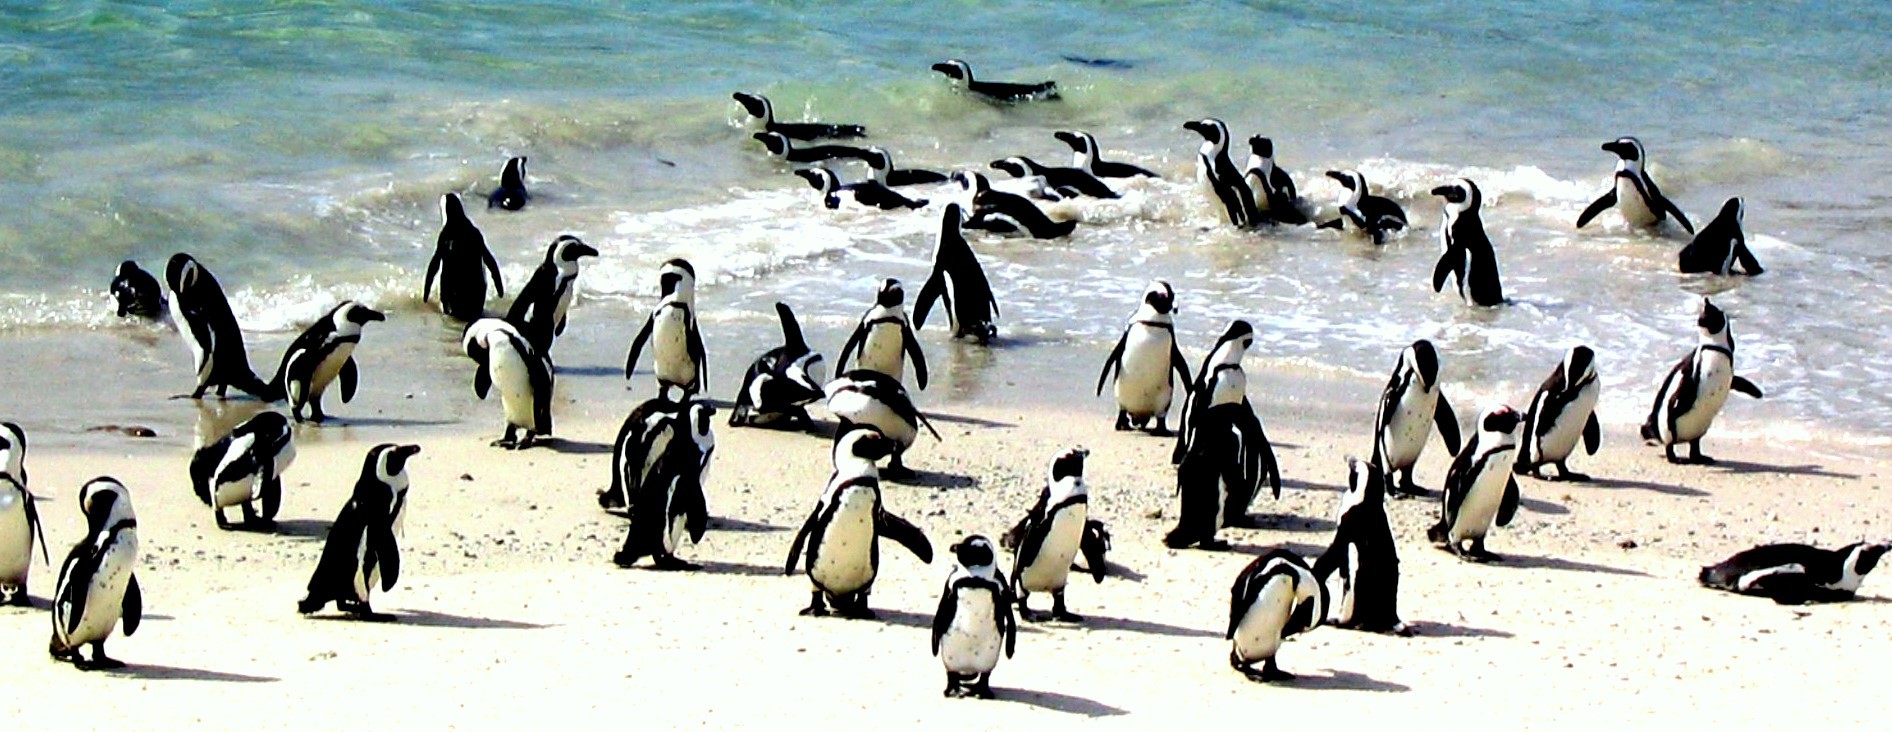 penguins_at_boulder-s_beach-_south_africa.jpg